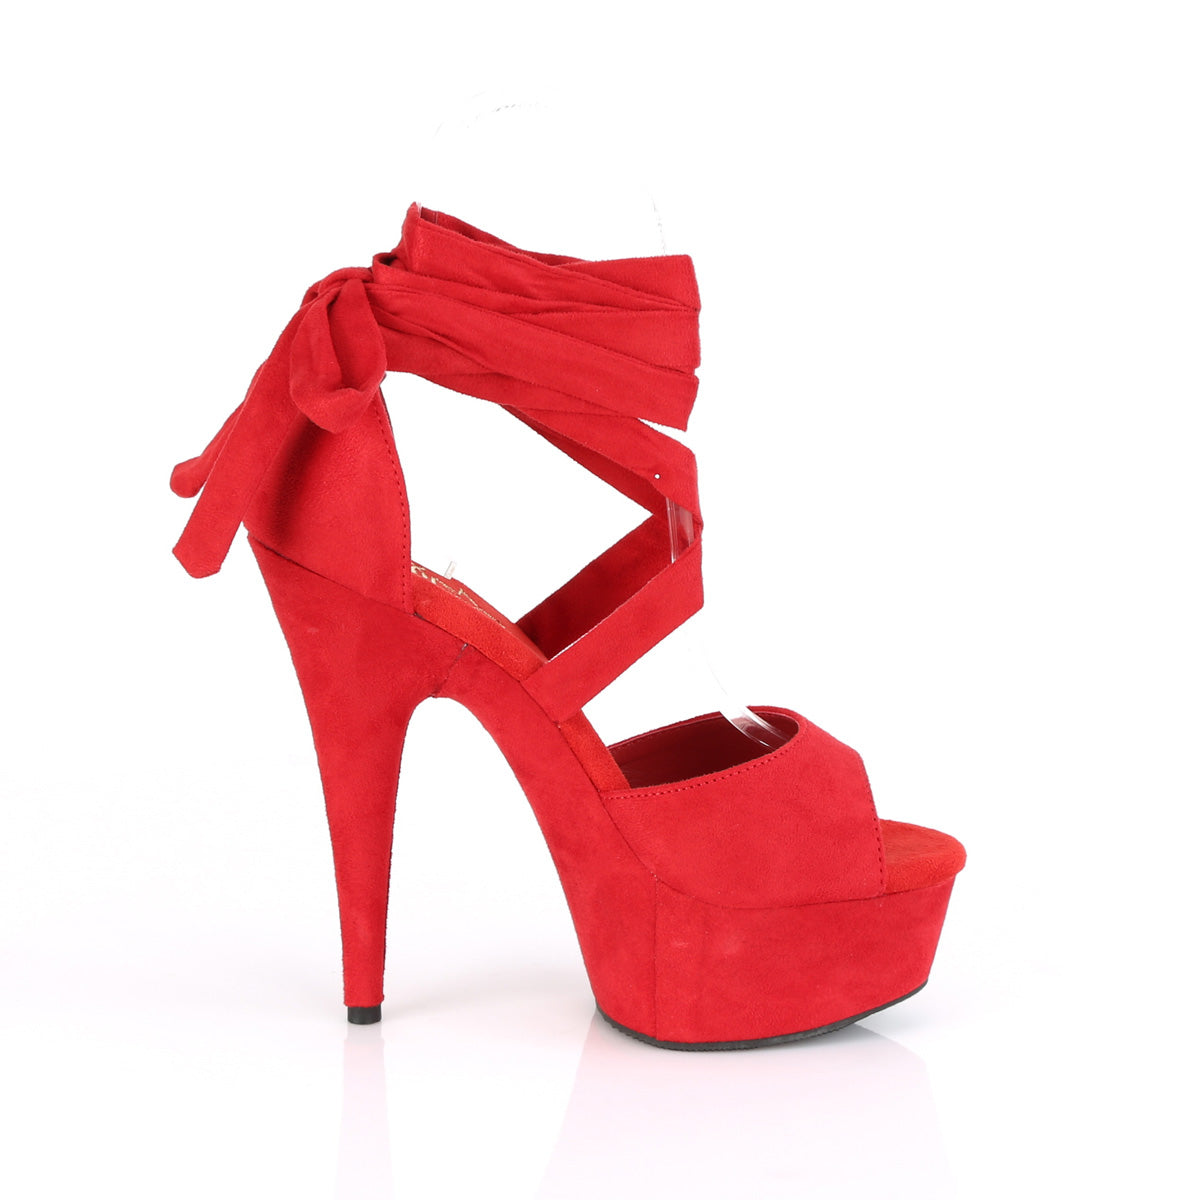 DELIGHT-679 Pleaser 6 Inch Heel Red Pole Dancing Platforms-Pleaser- Sexy Shoes Fetish Heels